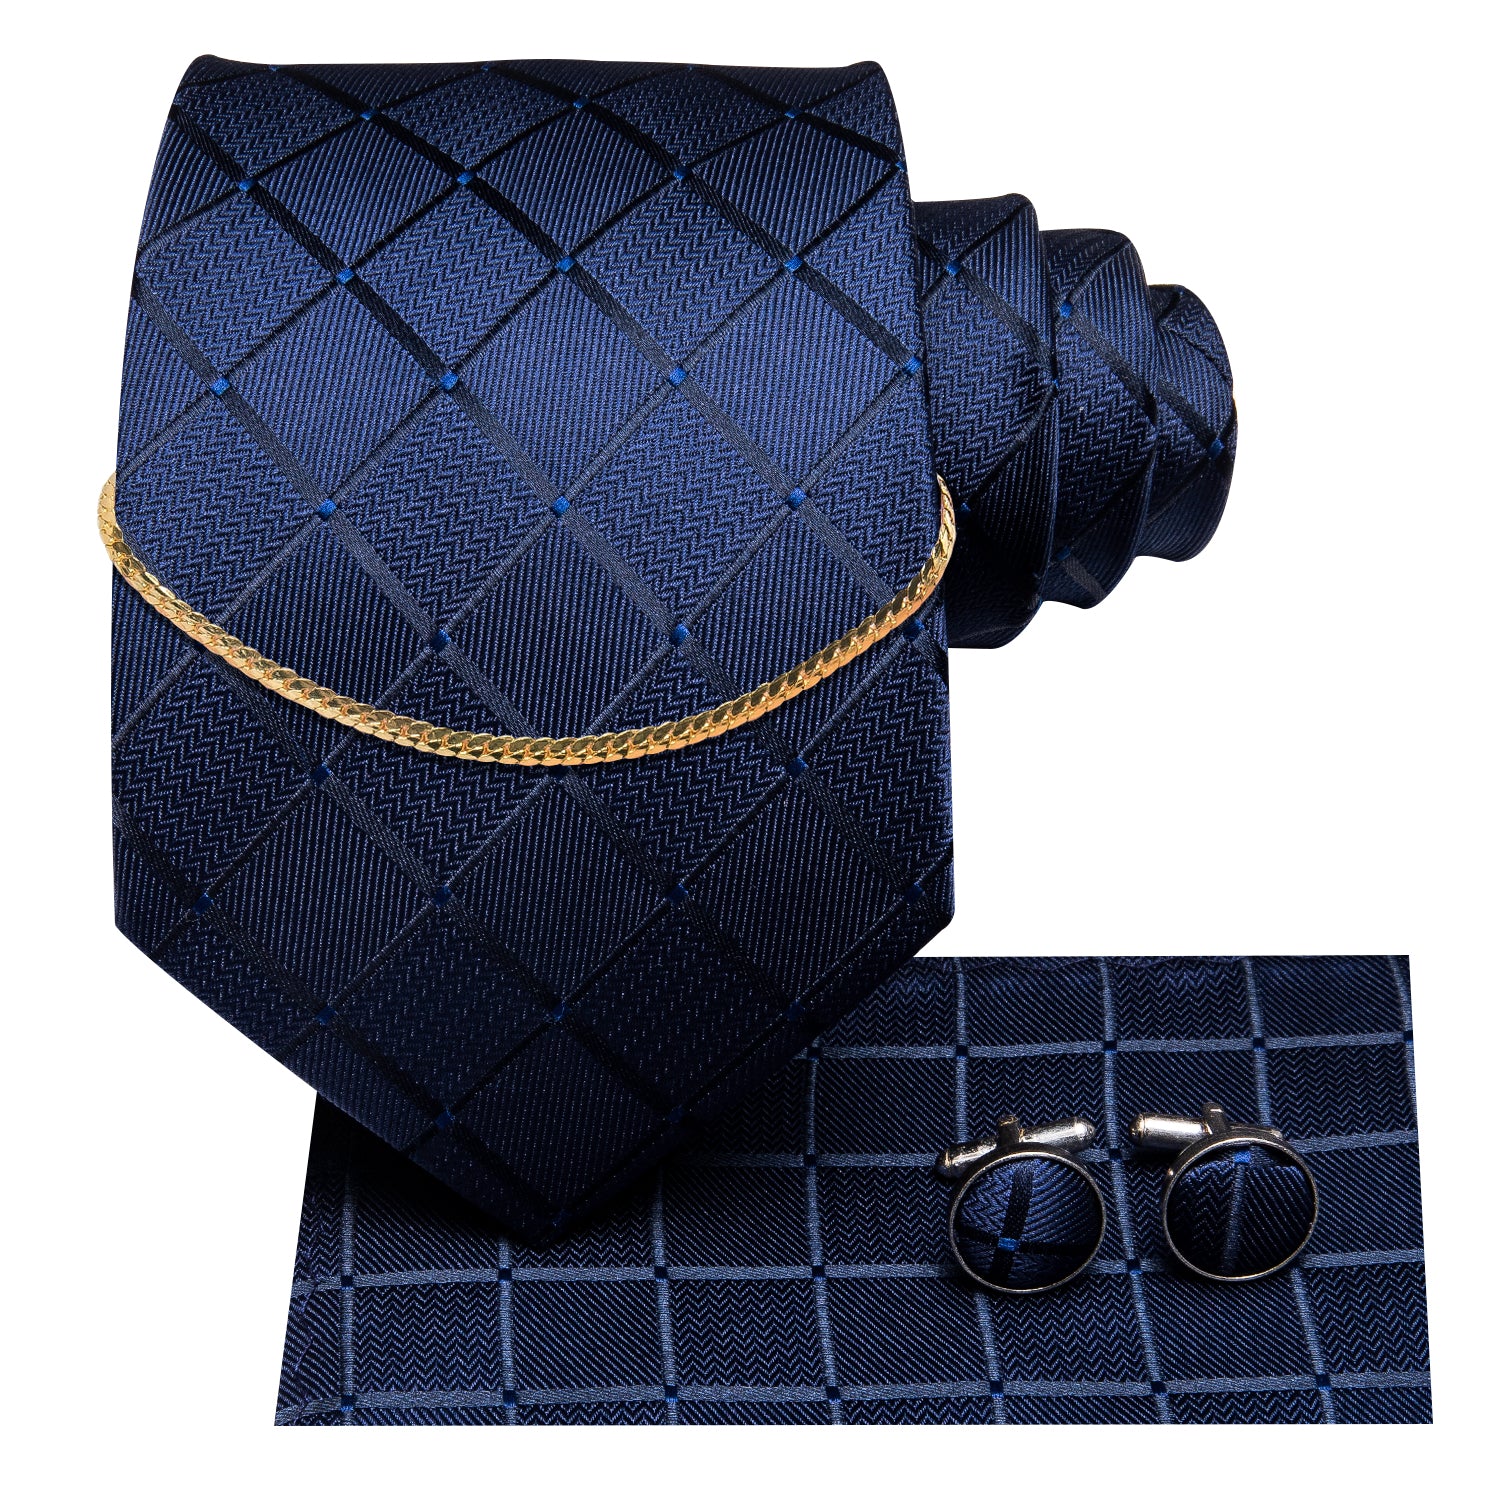 Blue Plaid Tie Pocket Square Cufflinks Set With Golden Chain